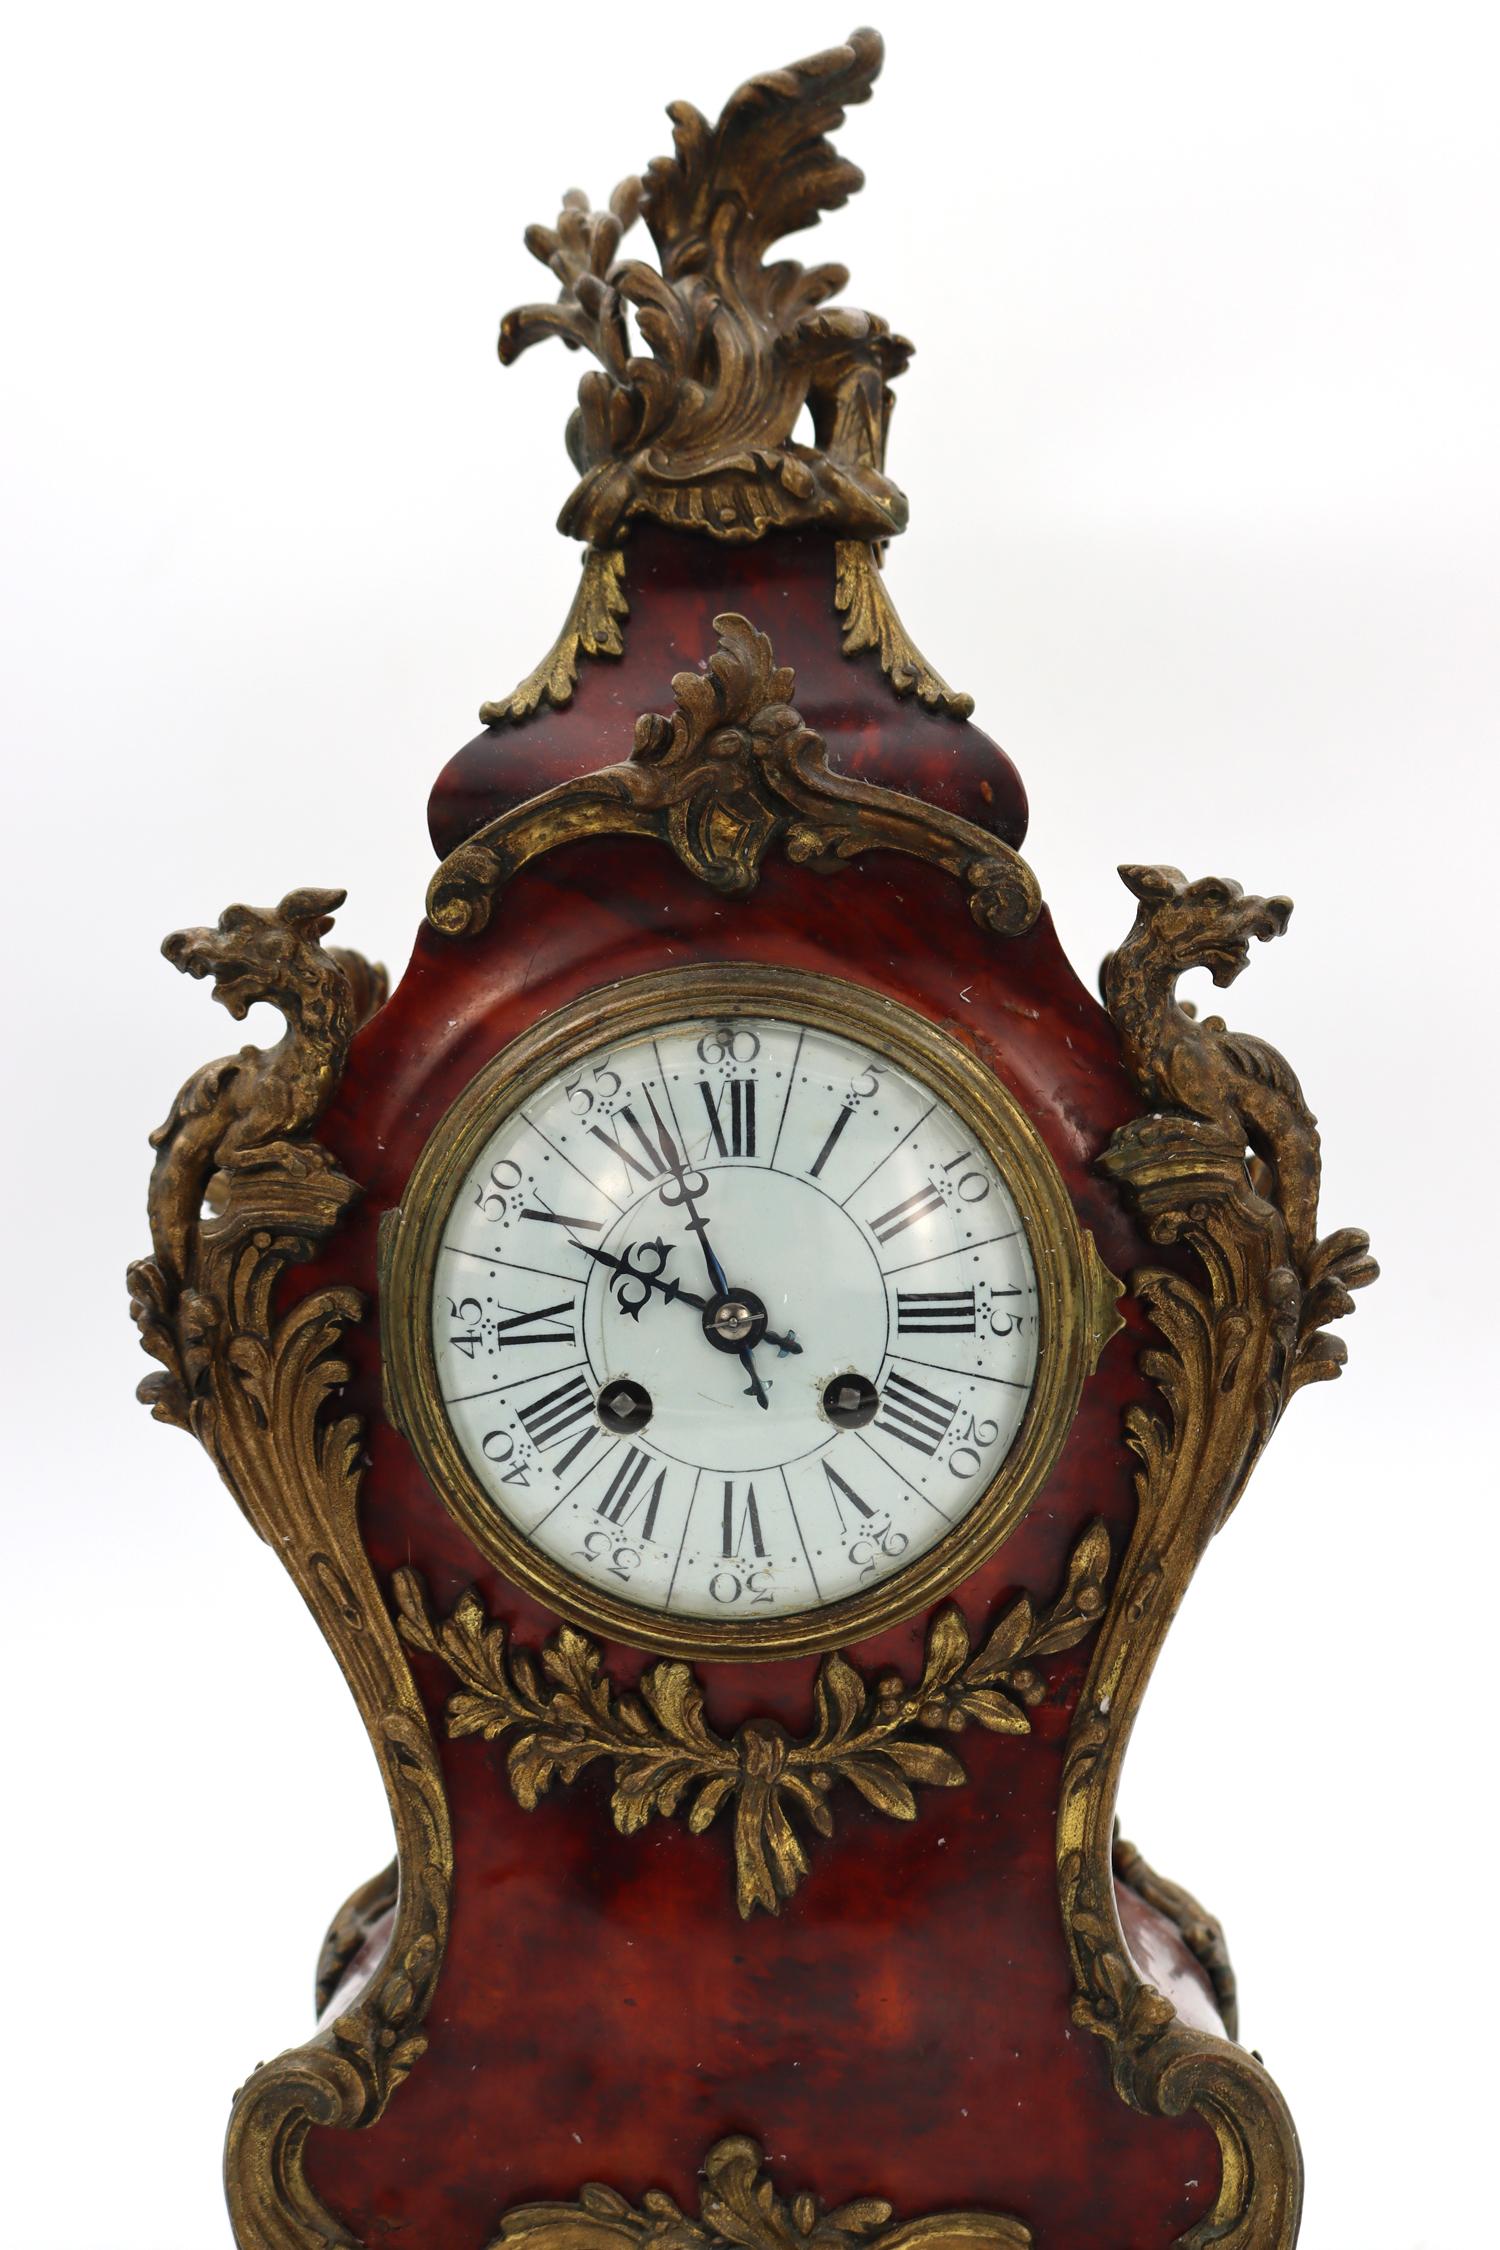 Clock, Cartel in Louis XV style, 19th century, Napoleon III period.
Measures: H: 45 cm, W: 22 cm, D: 14 cm.